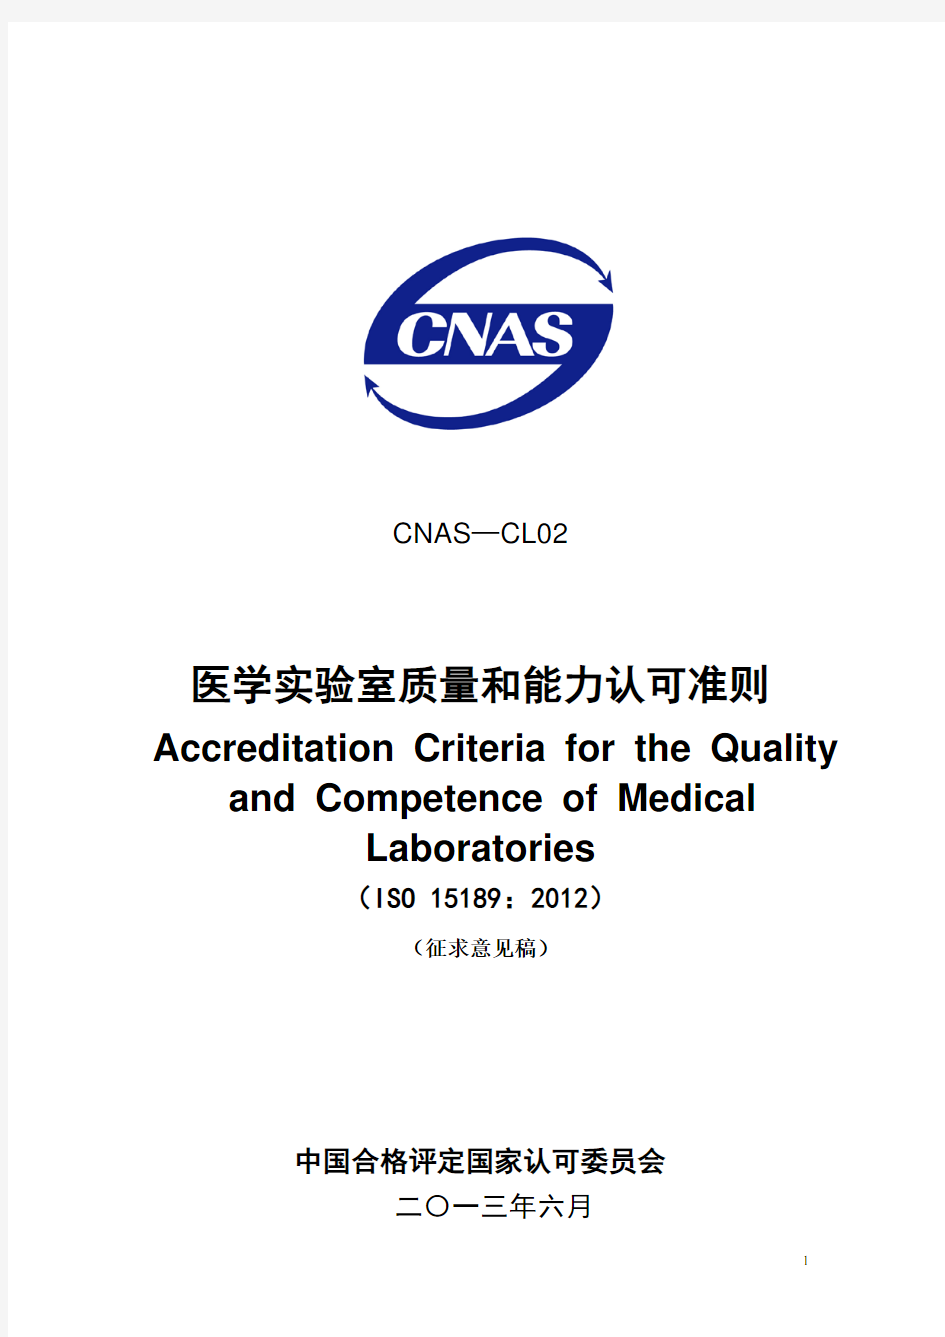 ISO15189-2013-《医学实验室质量和能力认可准则》征求意见稿-2012